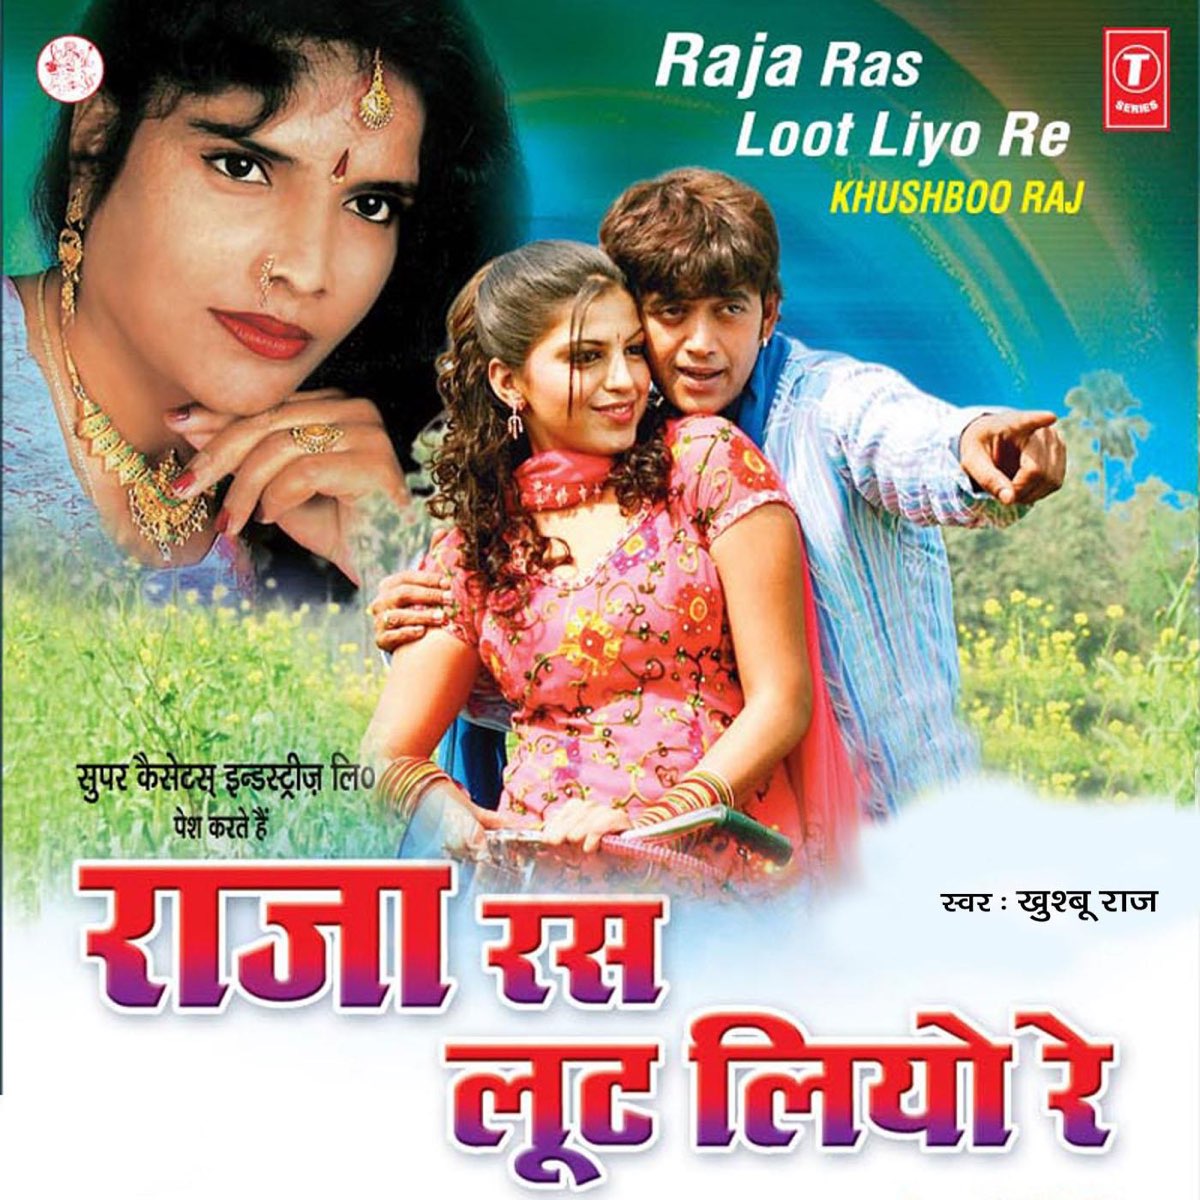 Raja Ras Loot Liyo Re - Album by Khushboo Raj - Apple Music